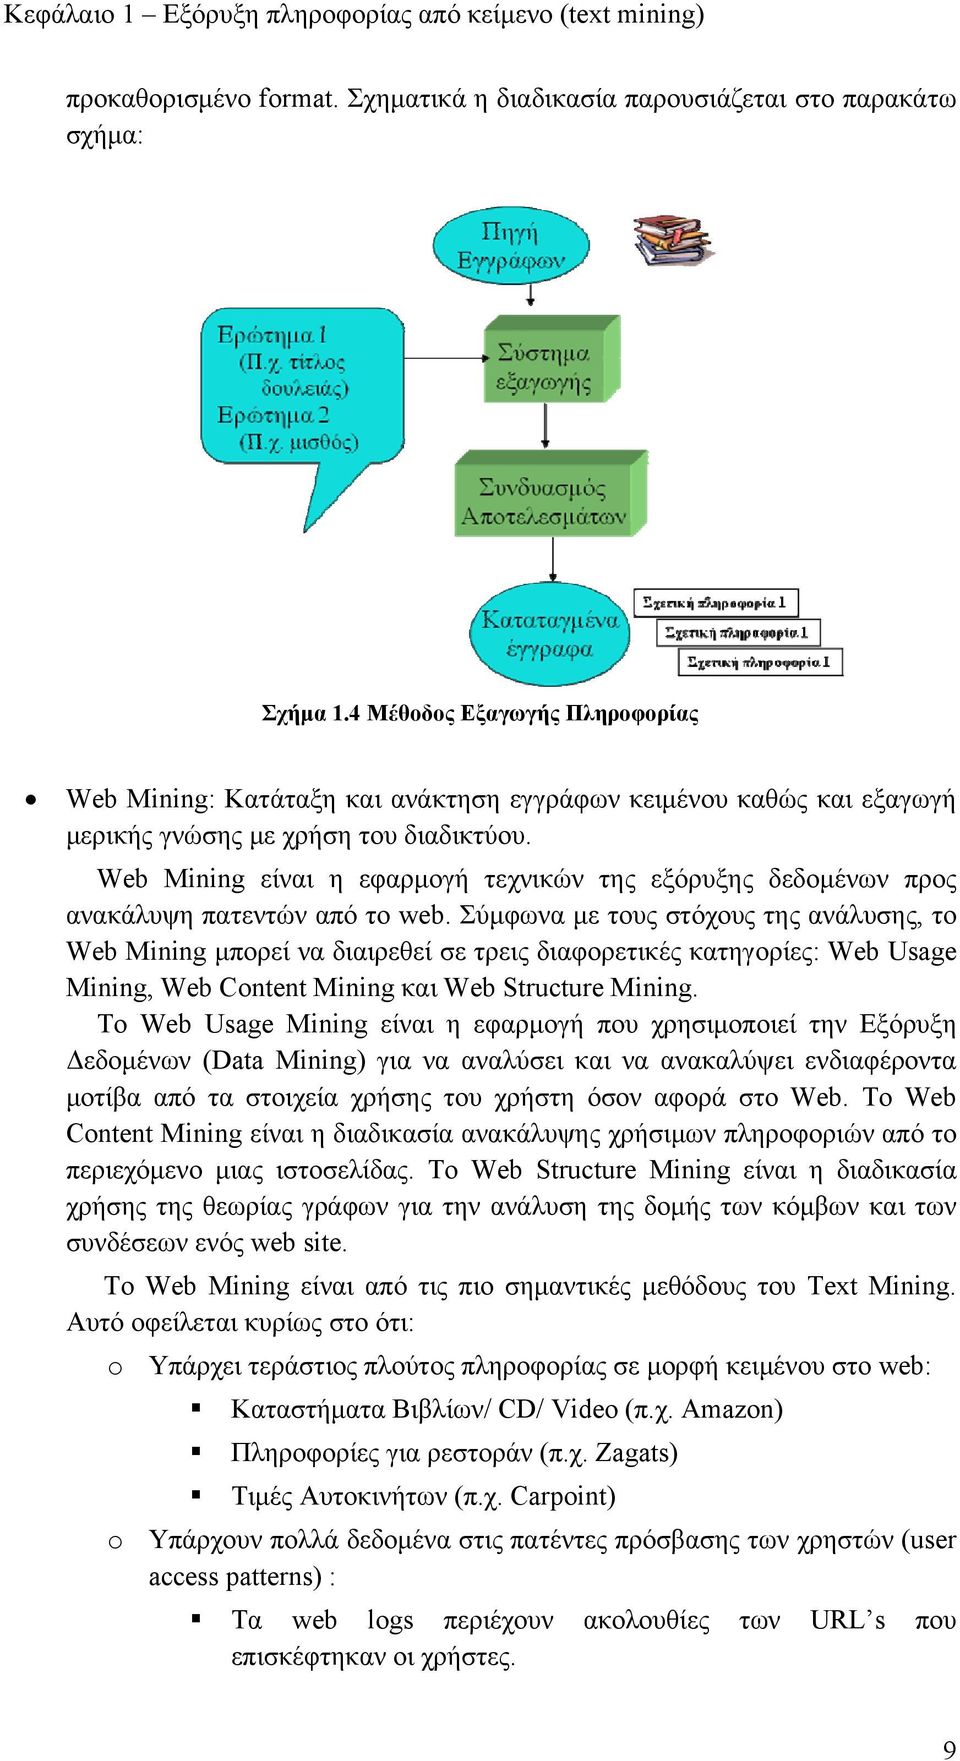 Web Mining είναι η εφαρμογή τεχνικών της εξόρυξης δεδομένων προς ανακάλυψη πατεντών από το web.